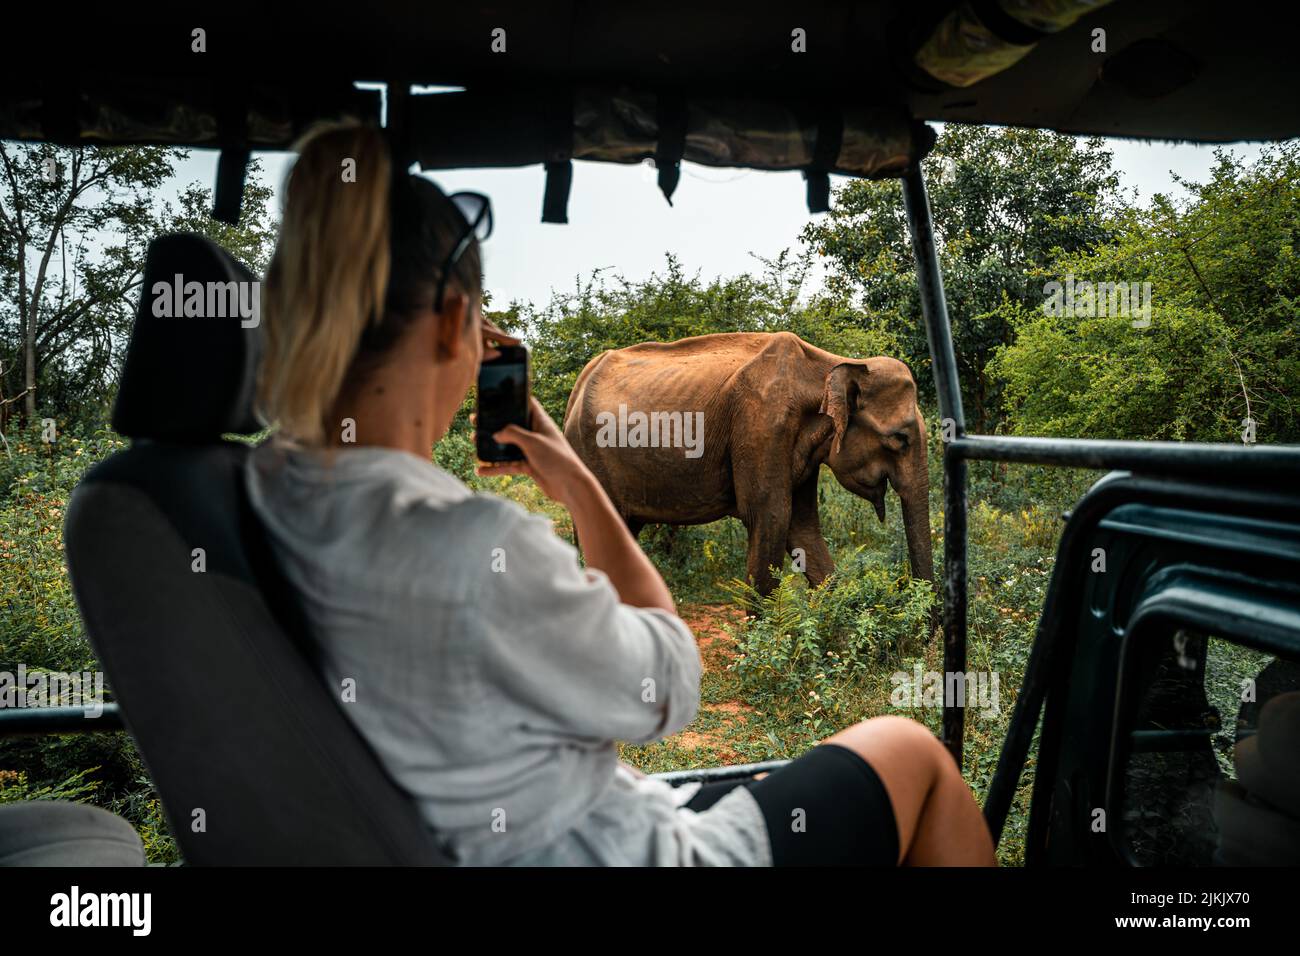 A young female taking photos of an elephant on a Sri Lankan safari Stock Photo